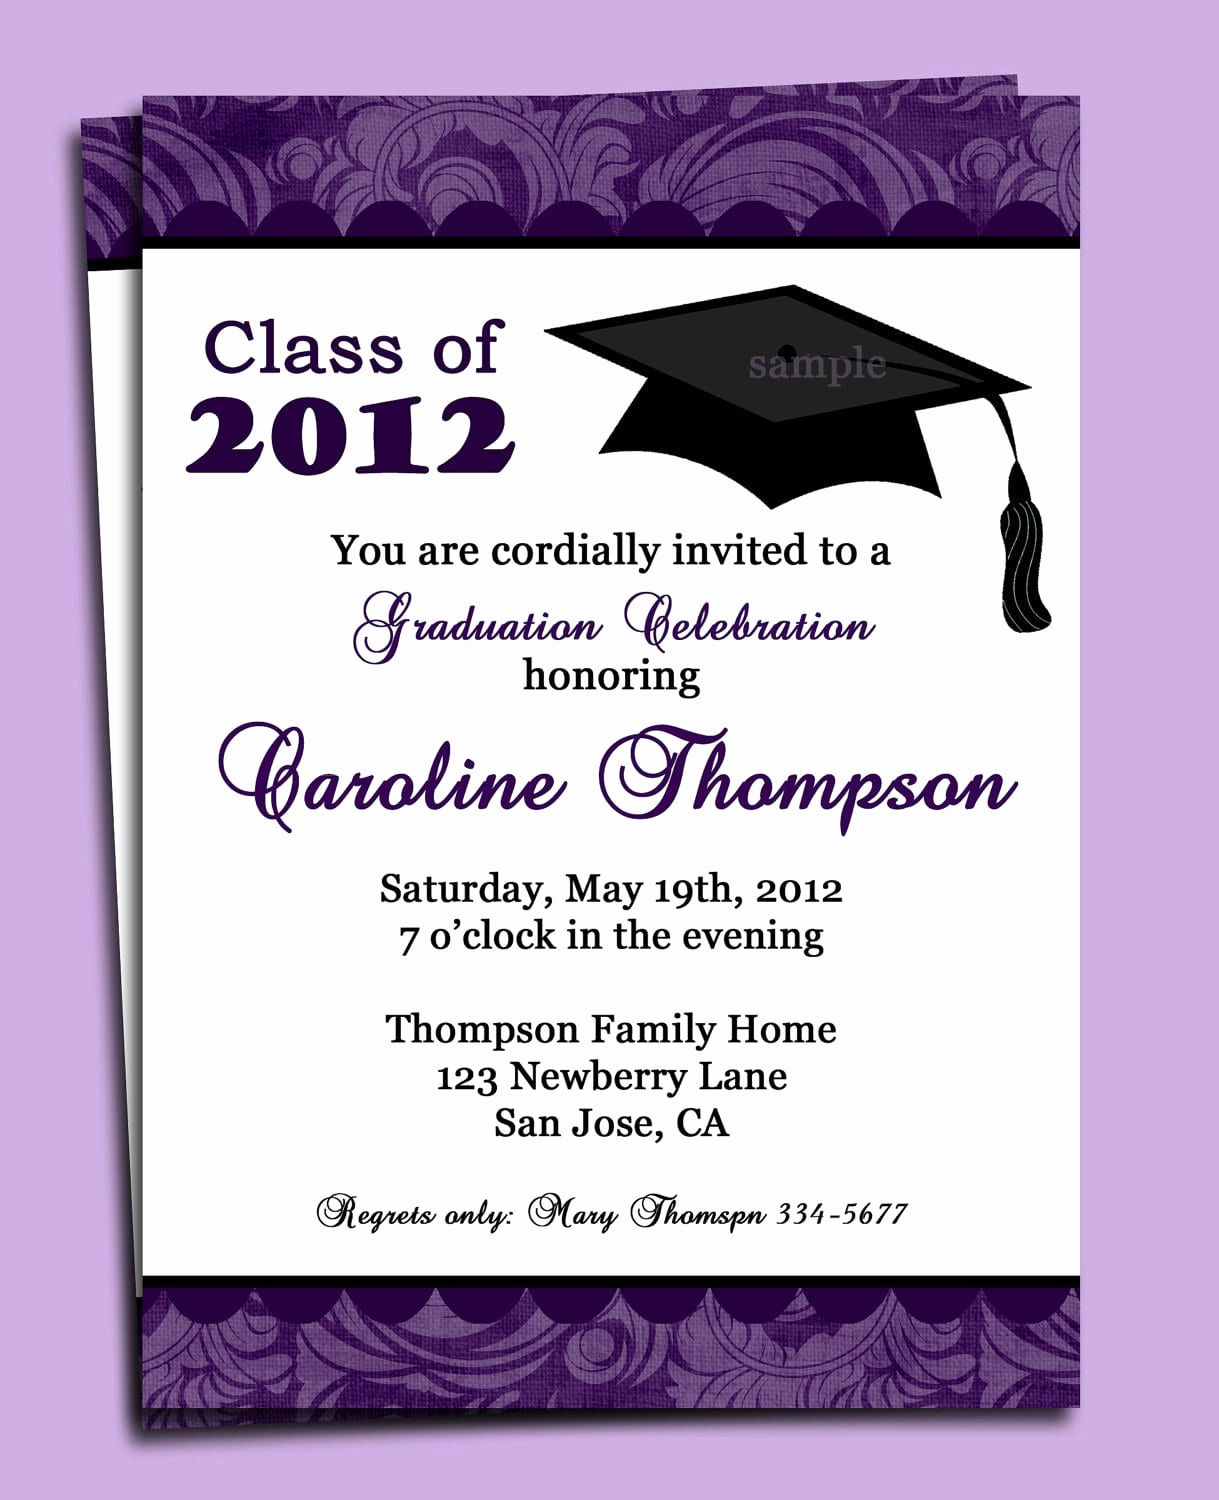 Graduation Invitation Cards Free Beautiful Sample Invitation for Graduation Party